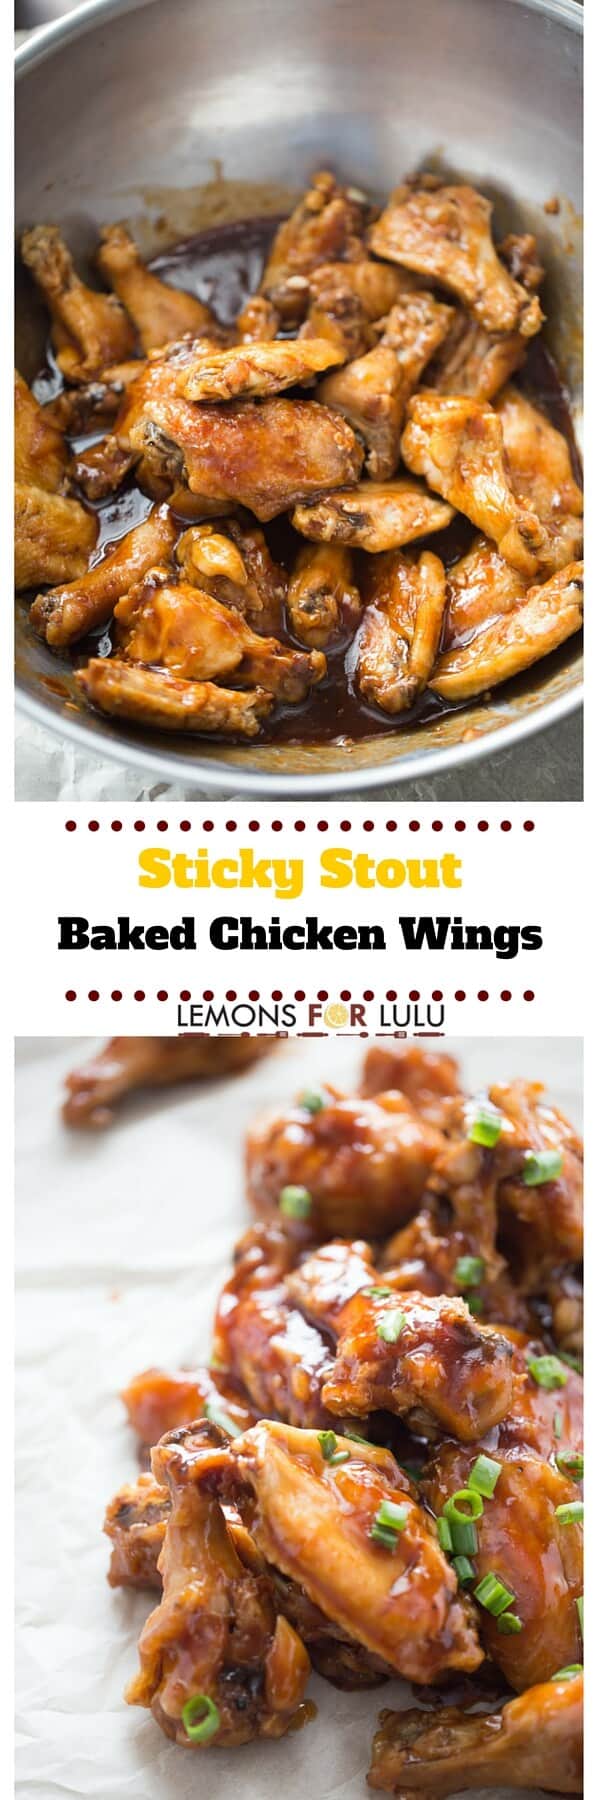 Sticky Stout Baked Chicken Wings Recipe - LemonsforLulu.com